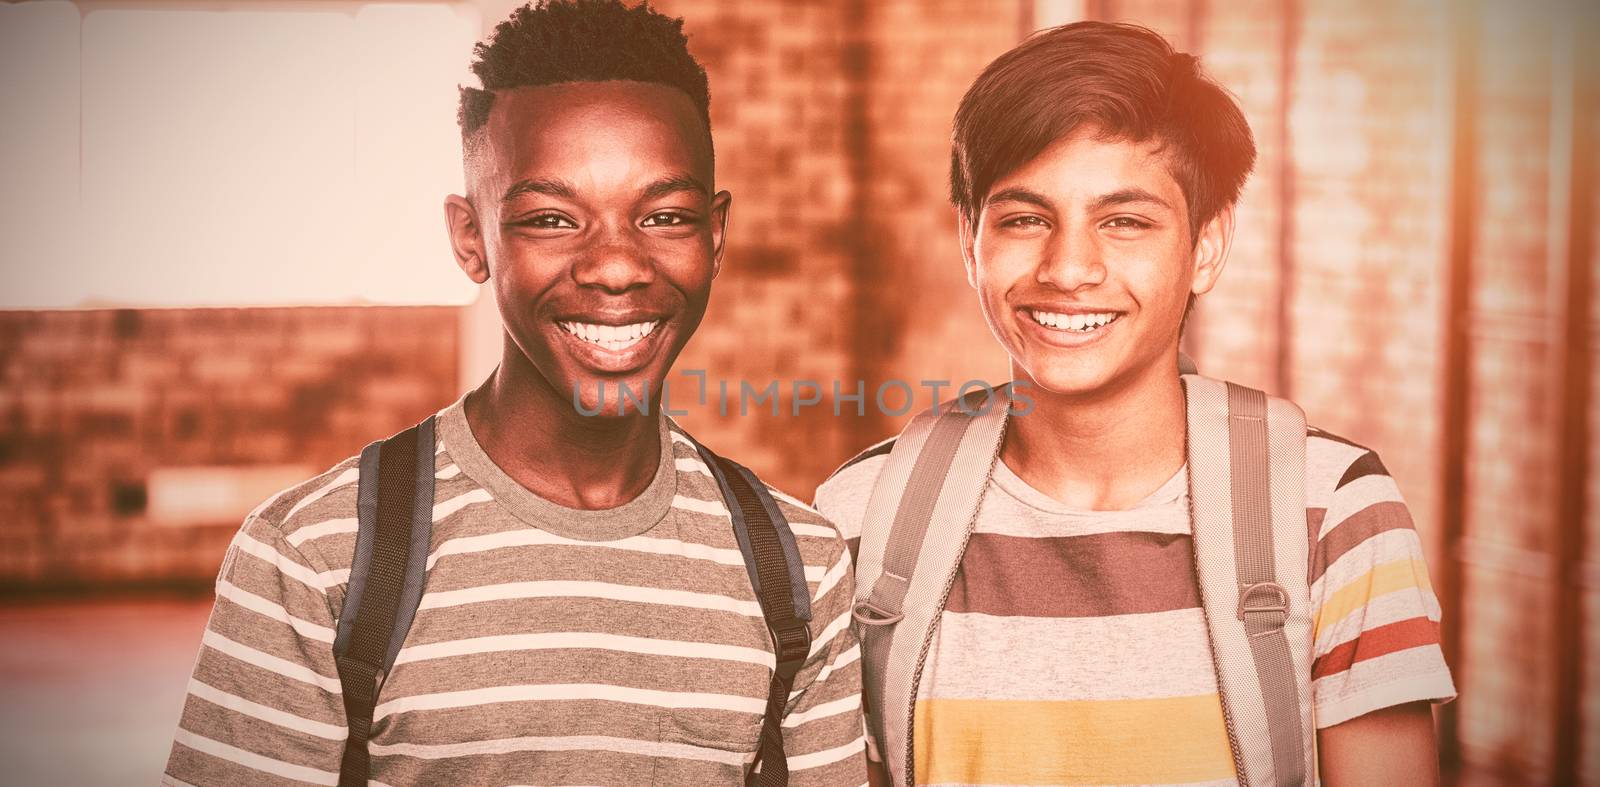 Portrait of happy schoolboys with schoolbag standing in campus by Wavebreakmedia